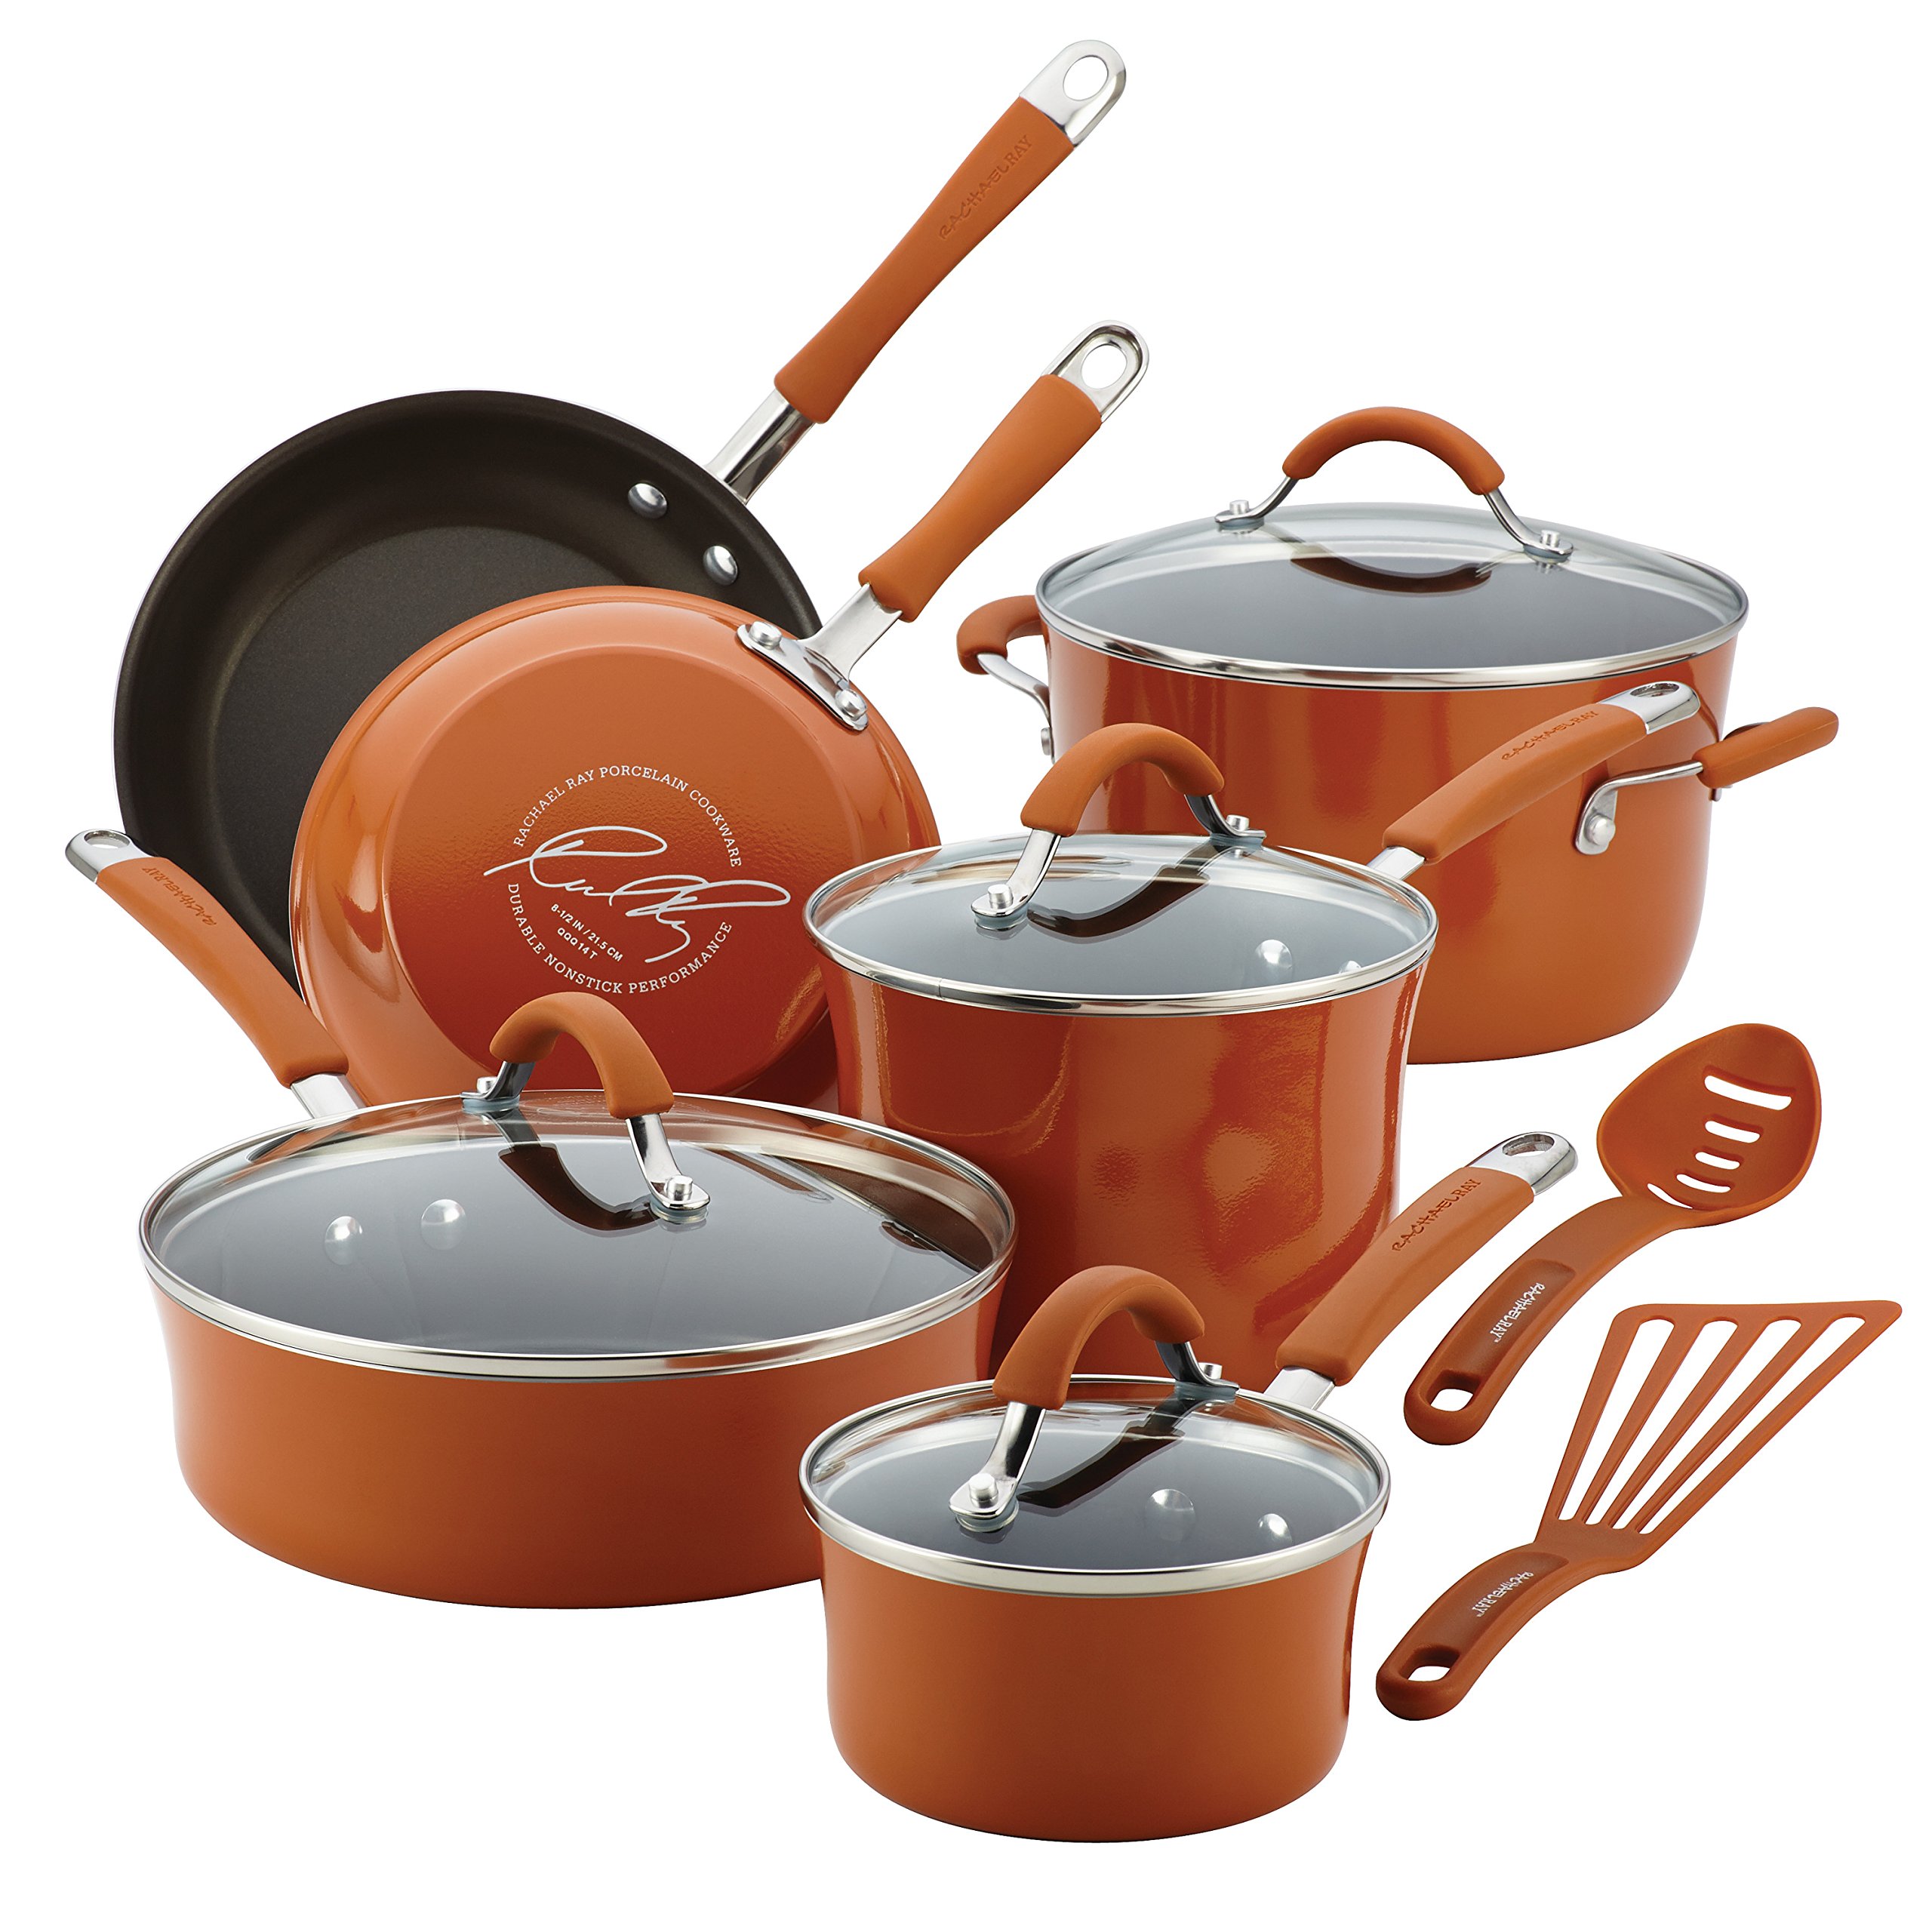 rachael ray pots and pans orange